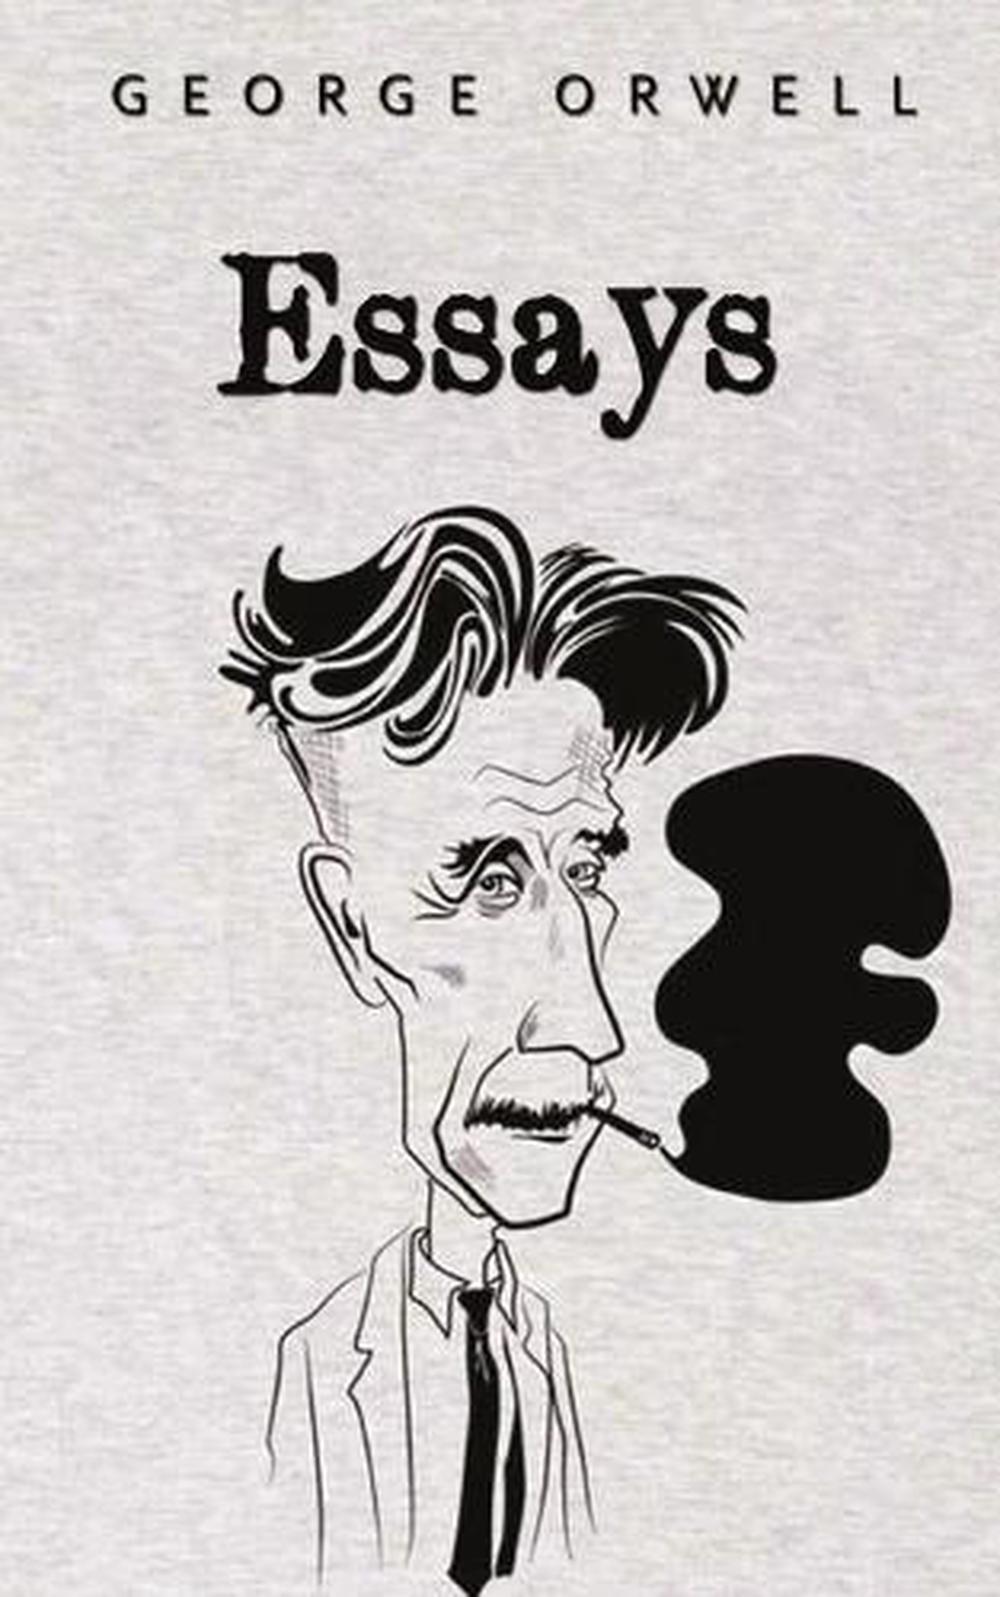 essays by george orwell